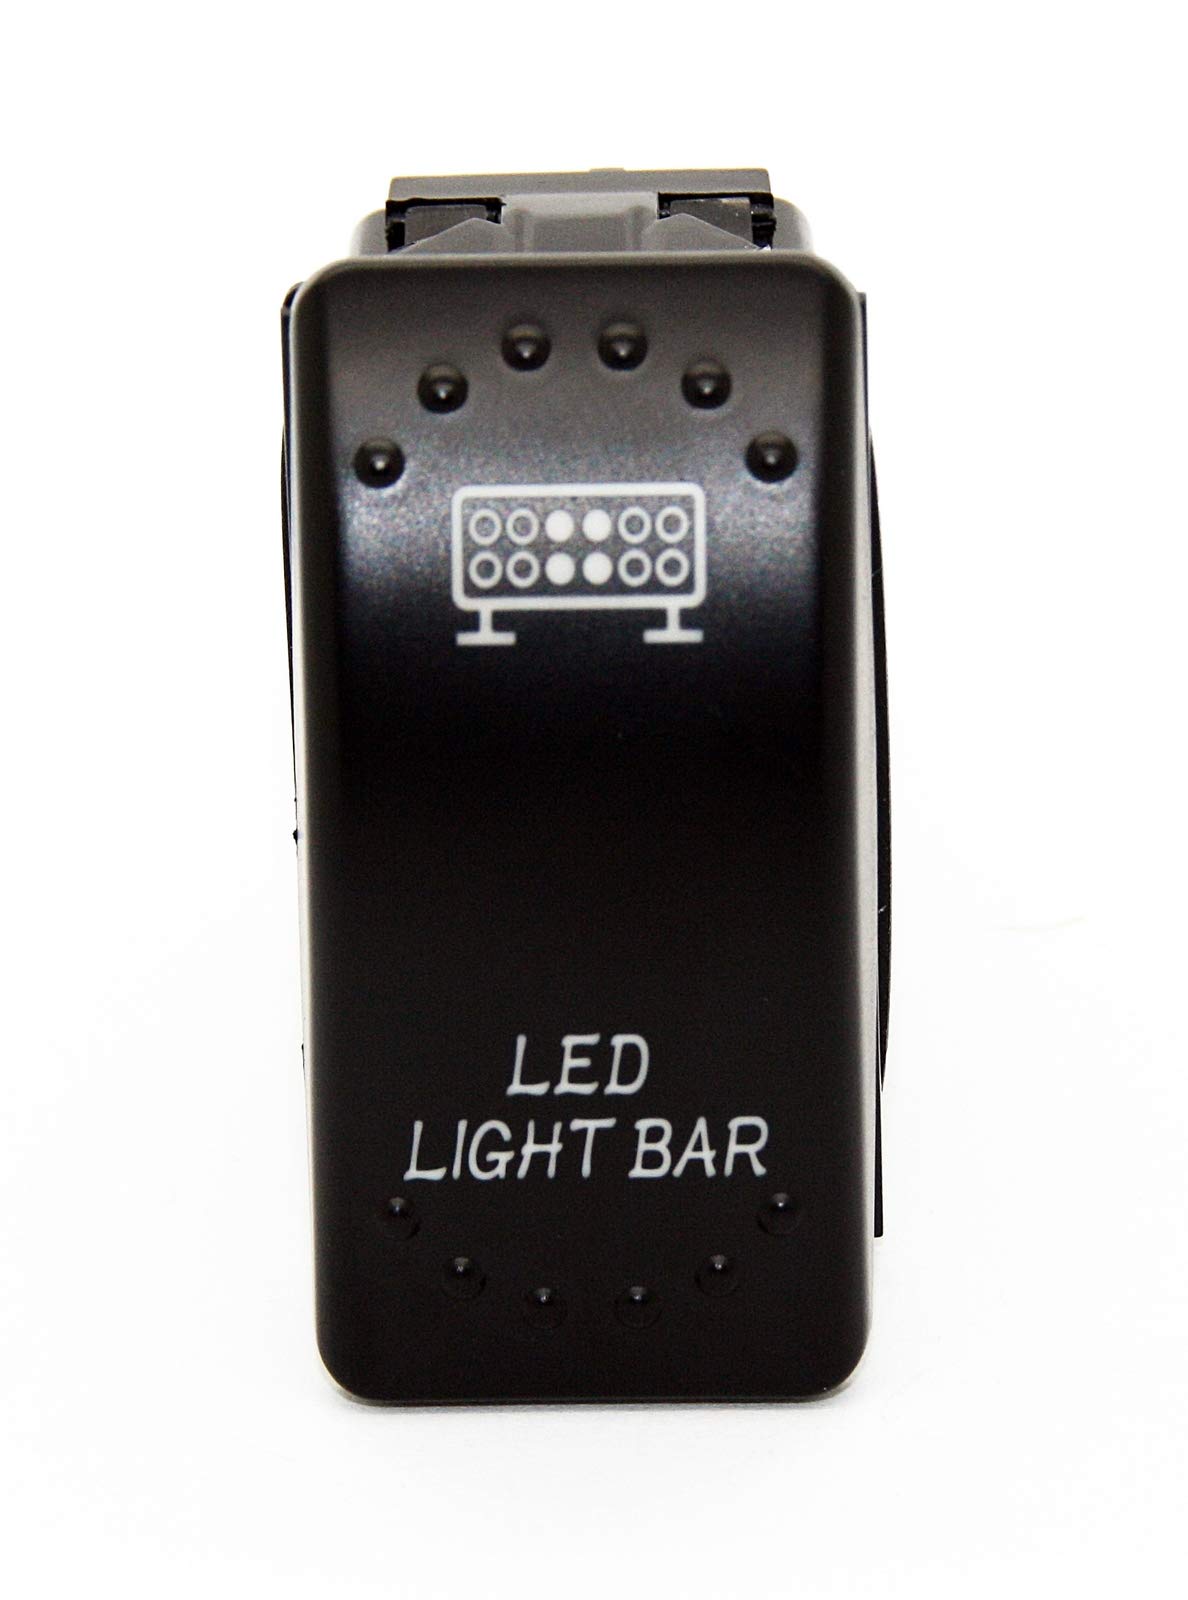 LED Light Bar JJ34 - Symbol Kippschalter Wippschalter Schalter Auto Boot KFZ LKW Licht 12V 24V von LED-Mafia